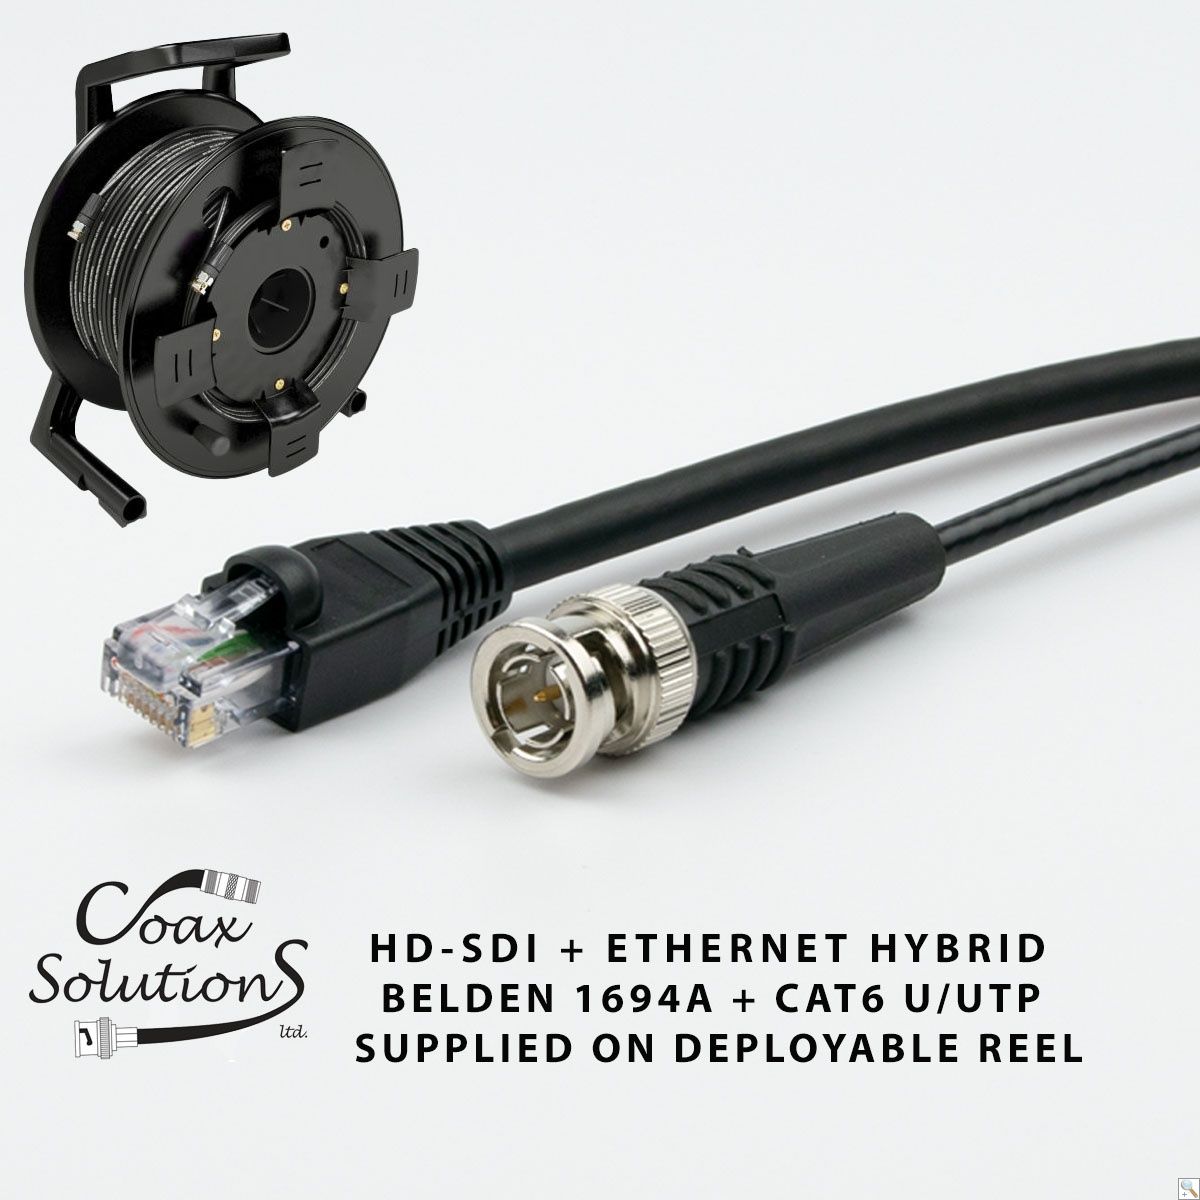 Belden 1694A + CAT6 Hybrid HD-SDI Patch Cable + Deployable Reel